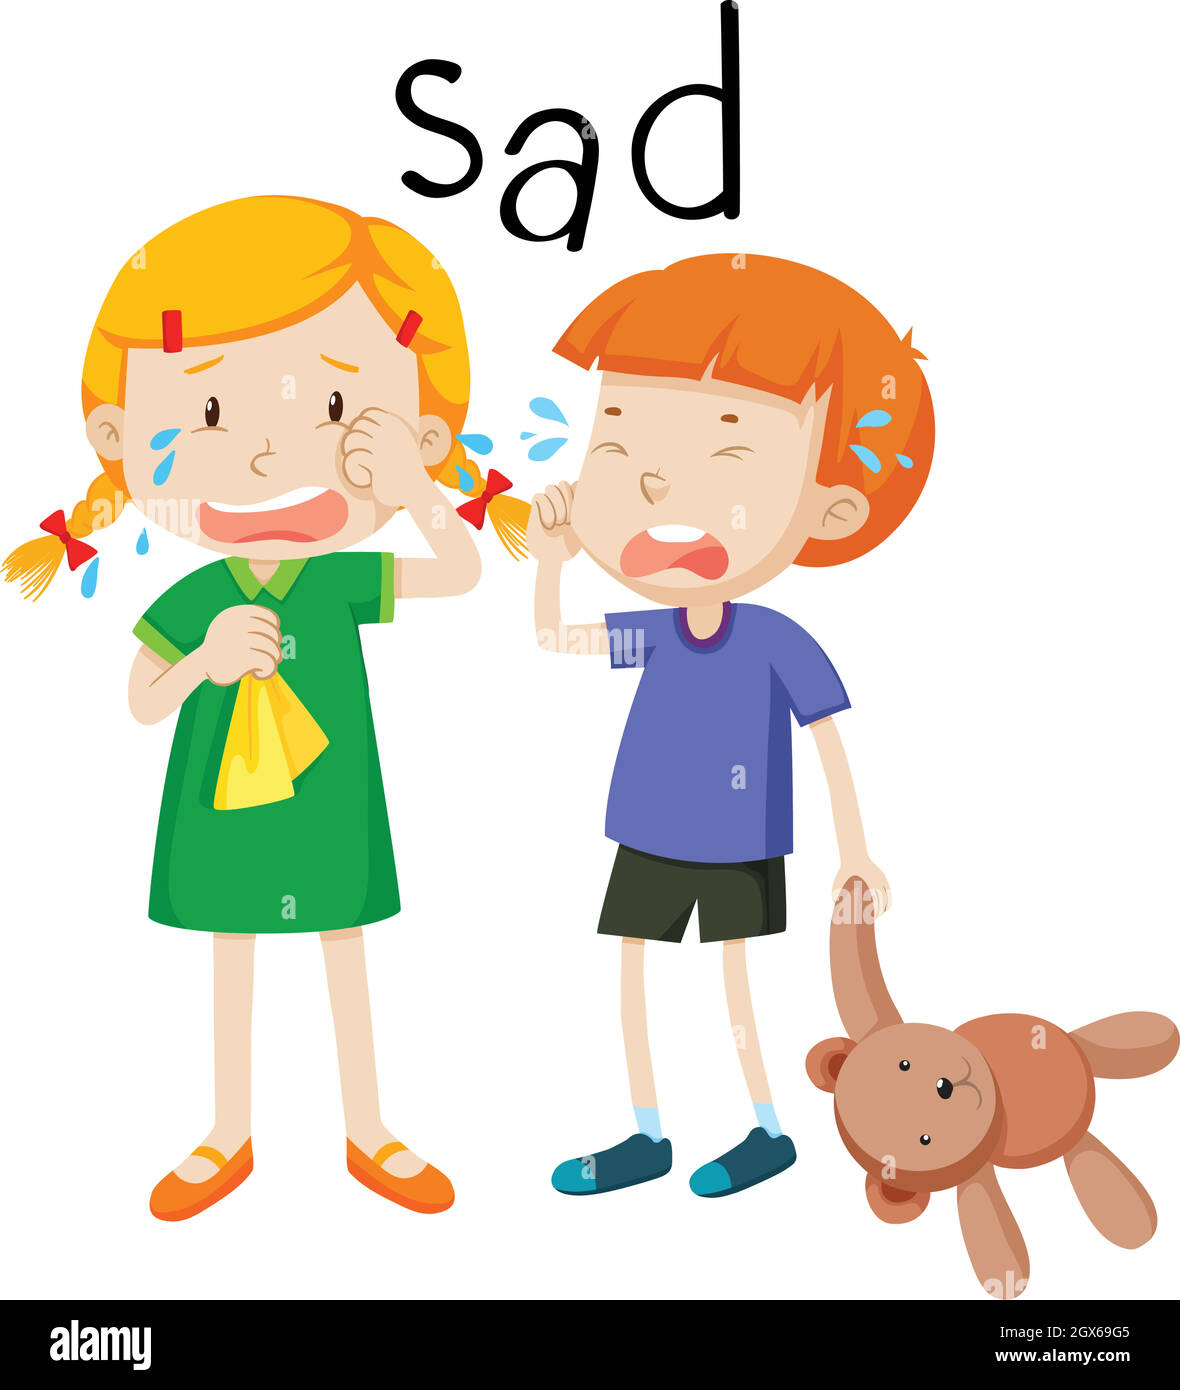 Zwei Kinder traurige Emotionen Stock Vektor